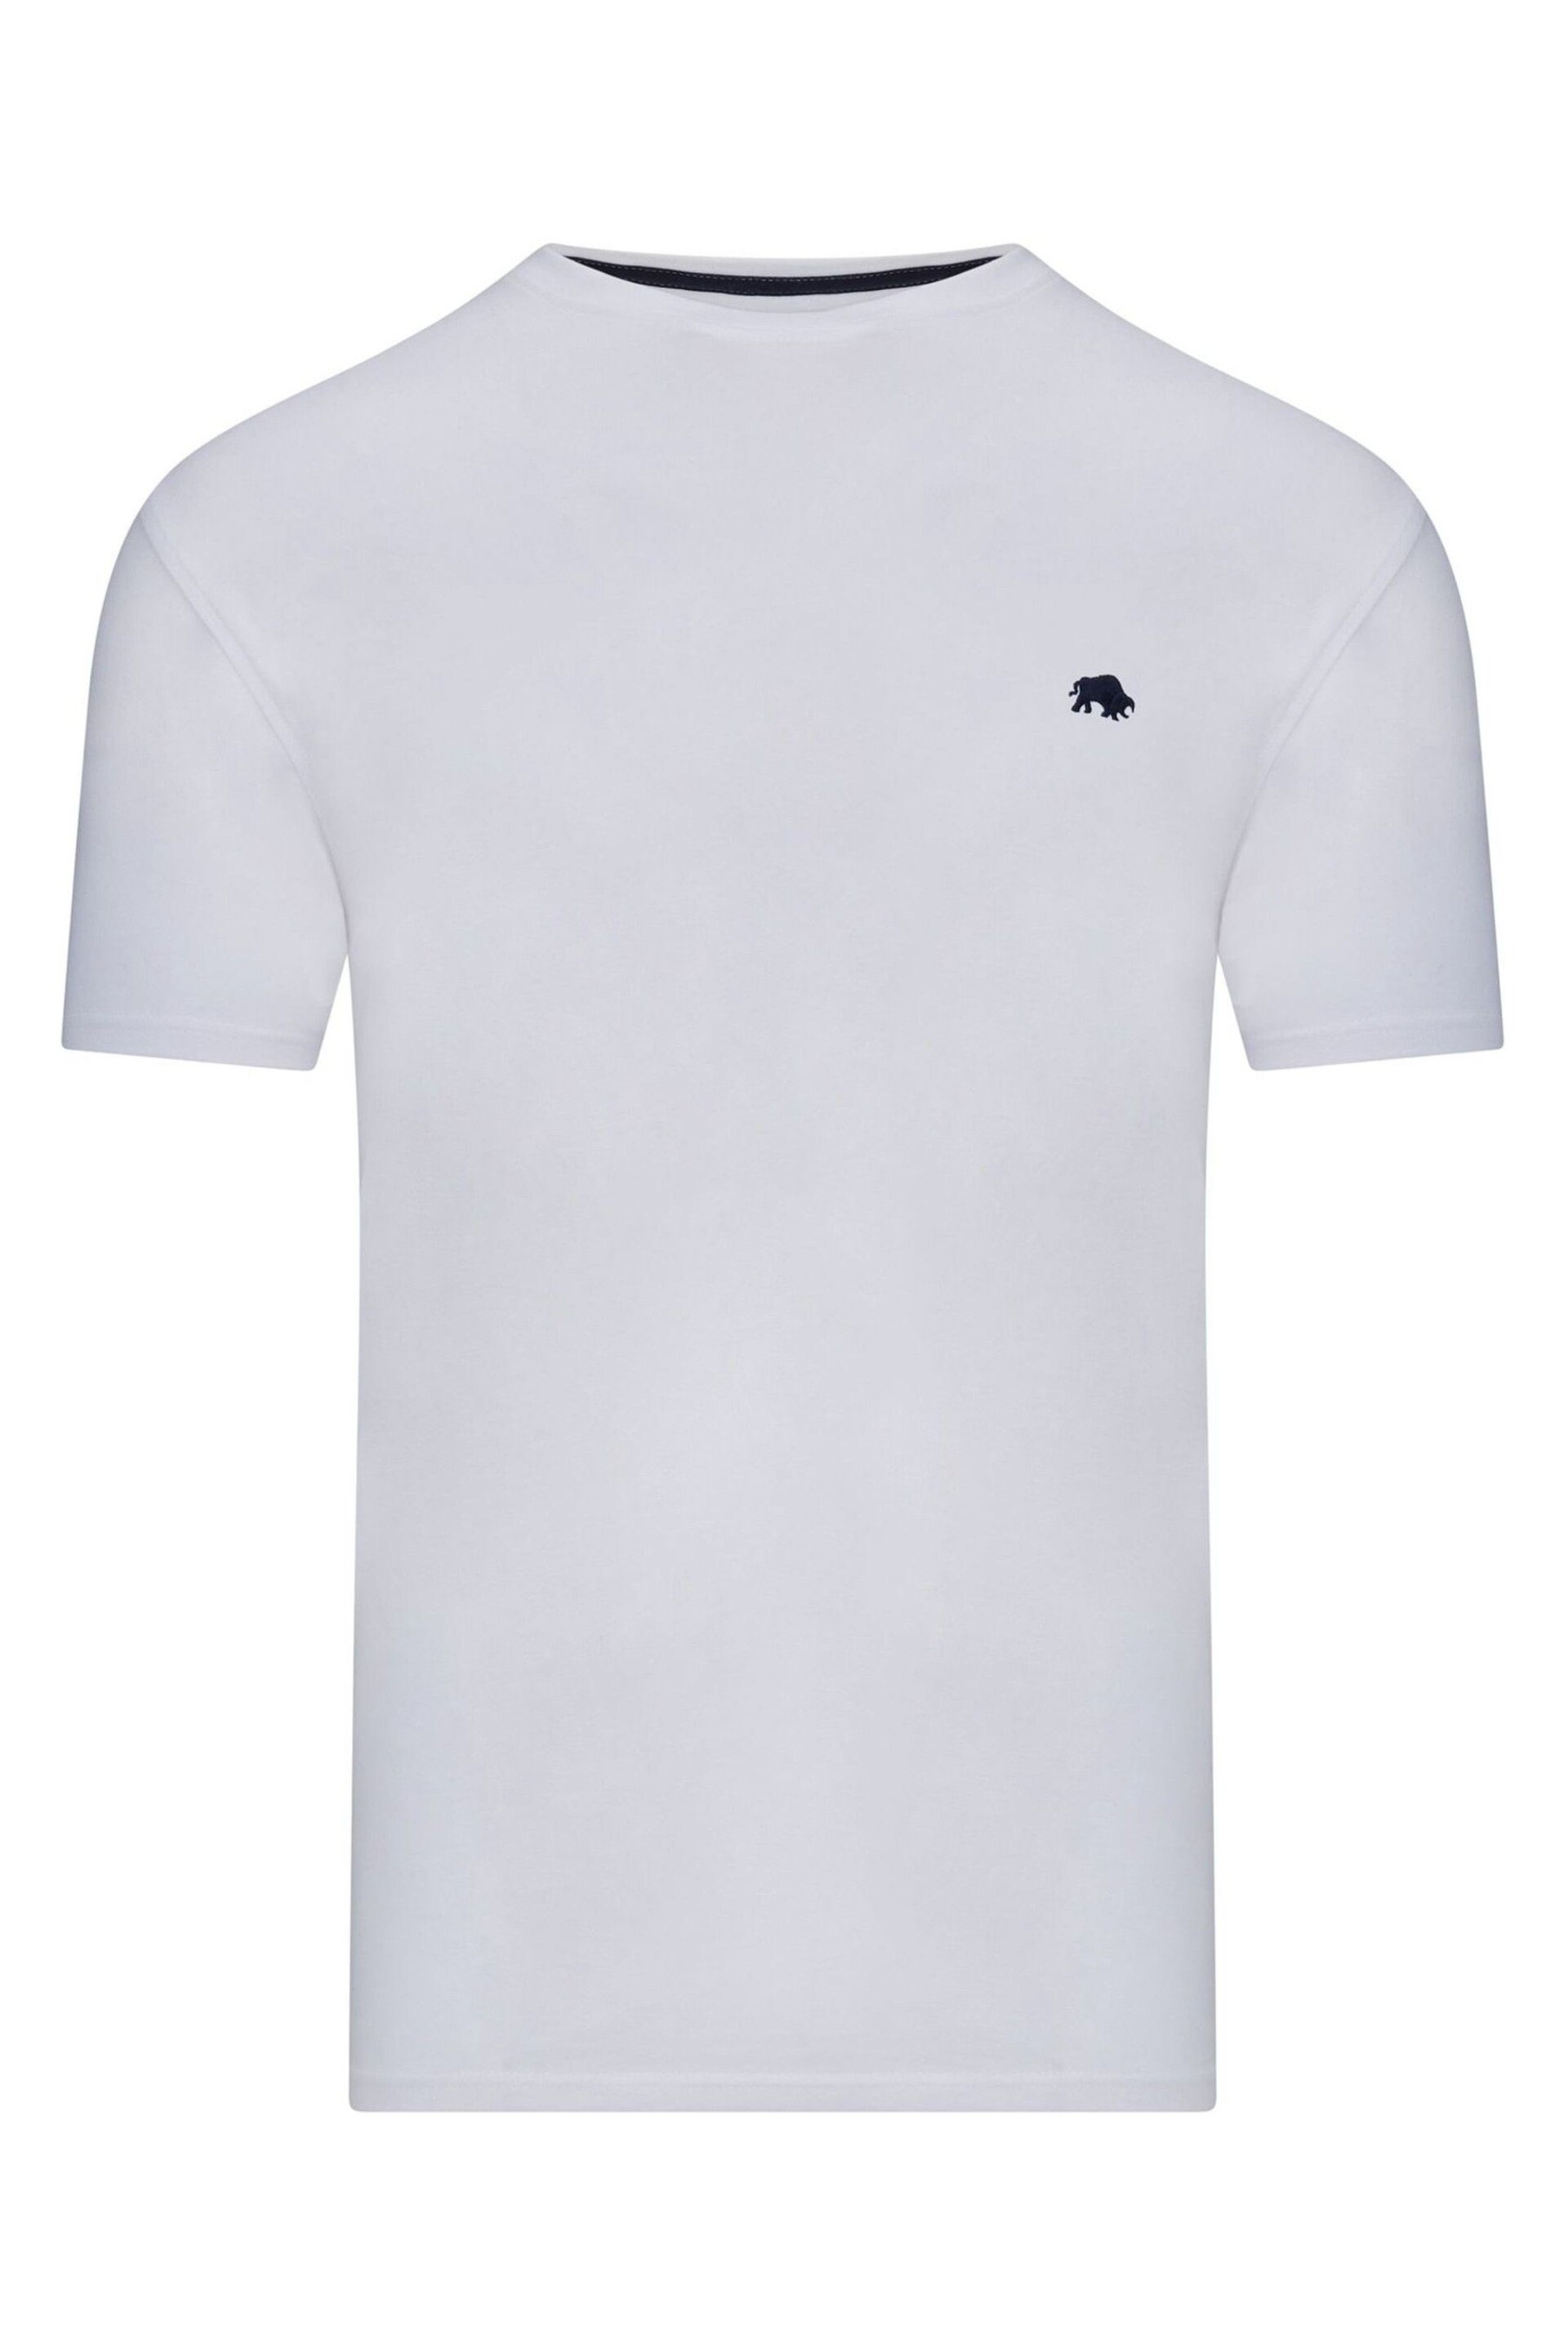 Raging Bull Black/White/Blue Multipack Classic Organic T-Shirt - Image 2 of 7